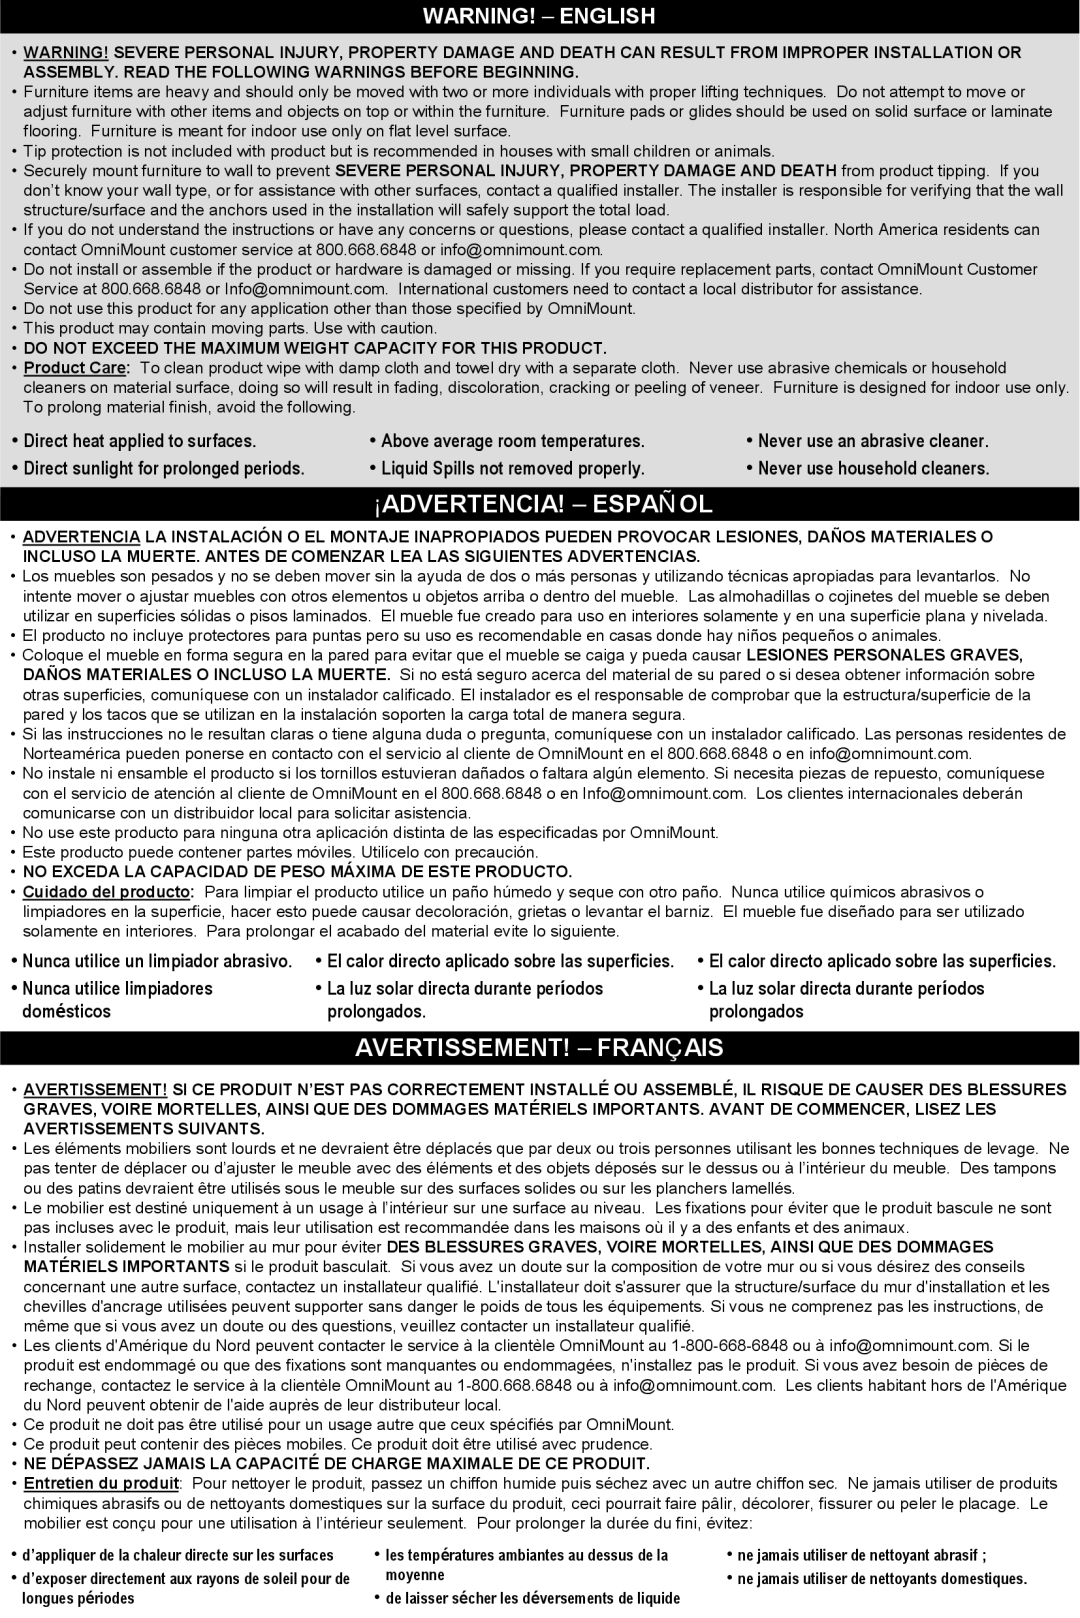 Omnimount Silhouette 48 instruction manual ¡Advertencia! - Español, Avertissement! - Français, Warning! - English 